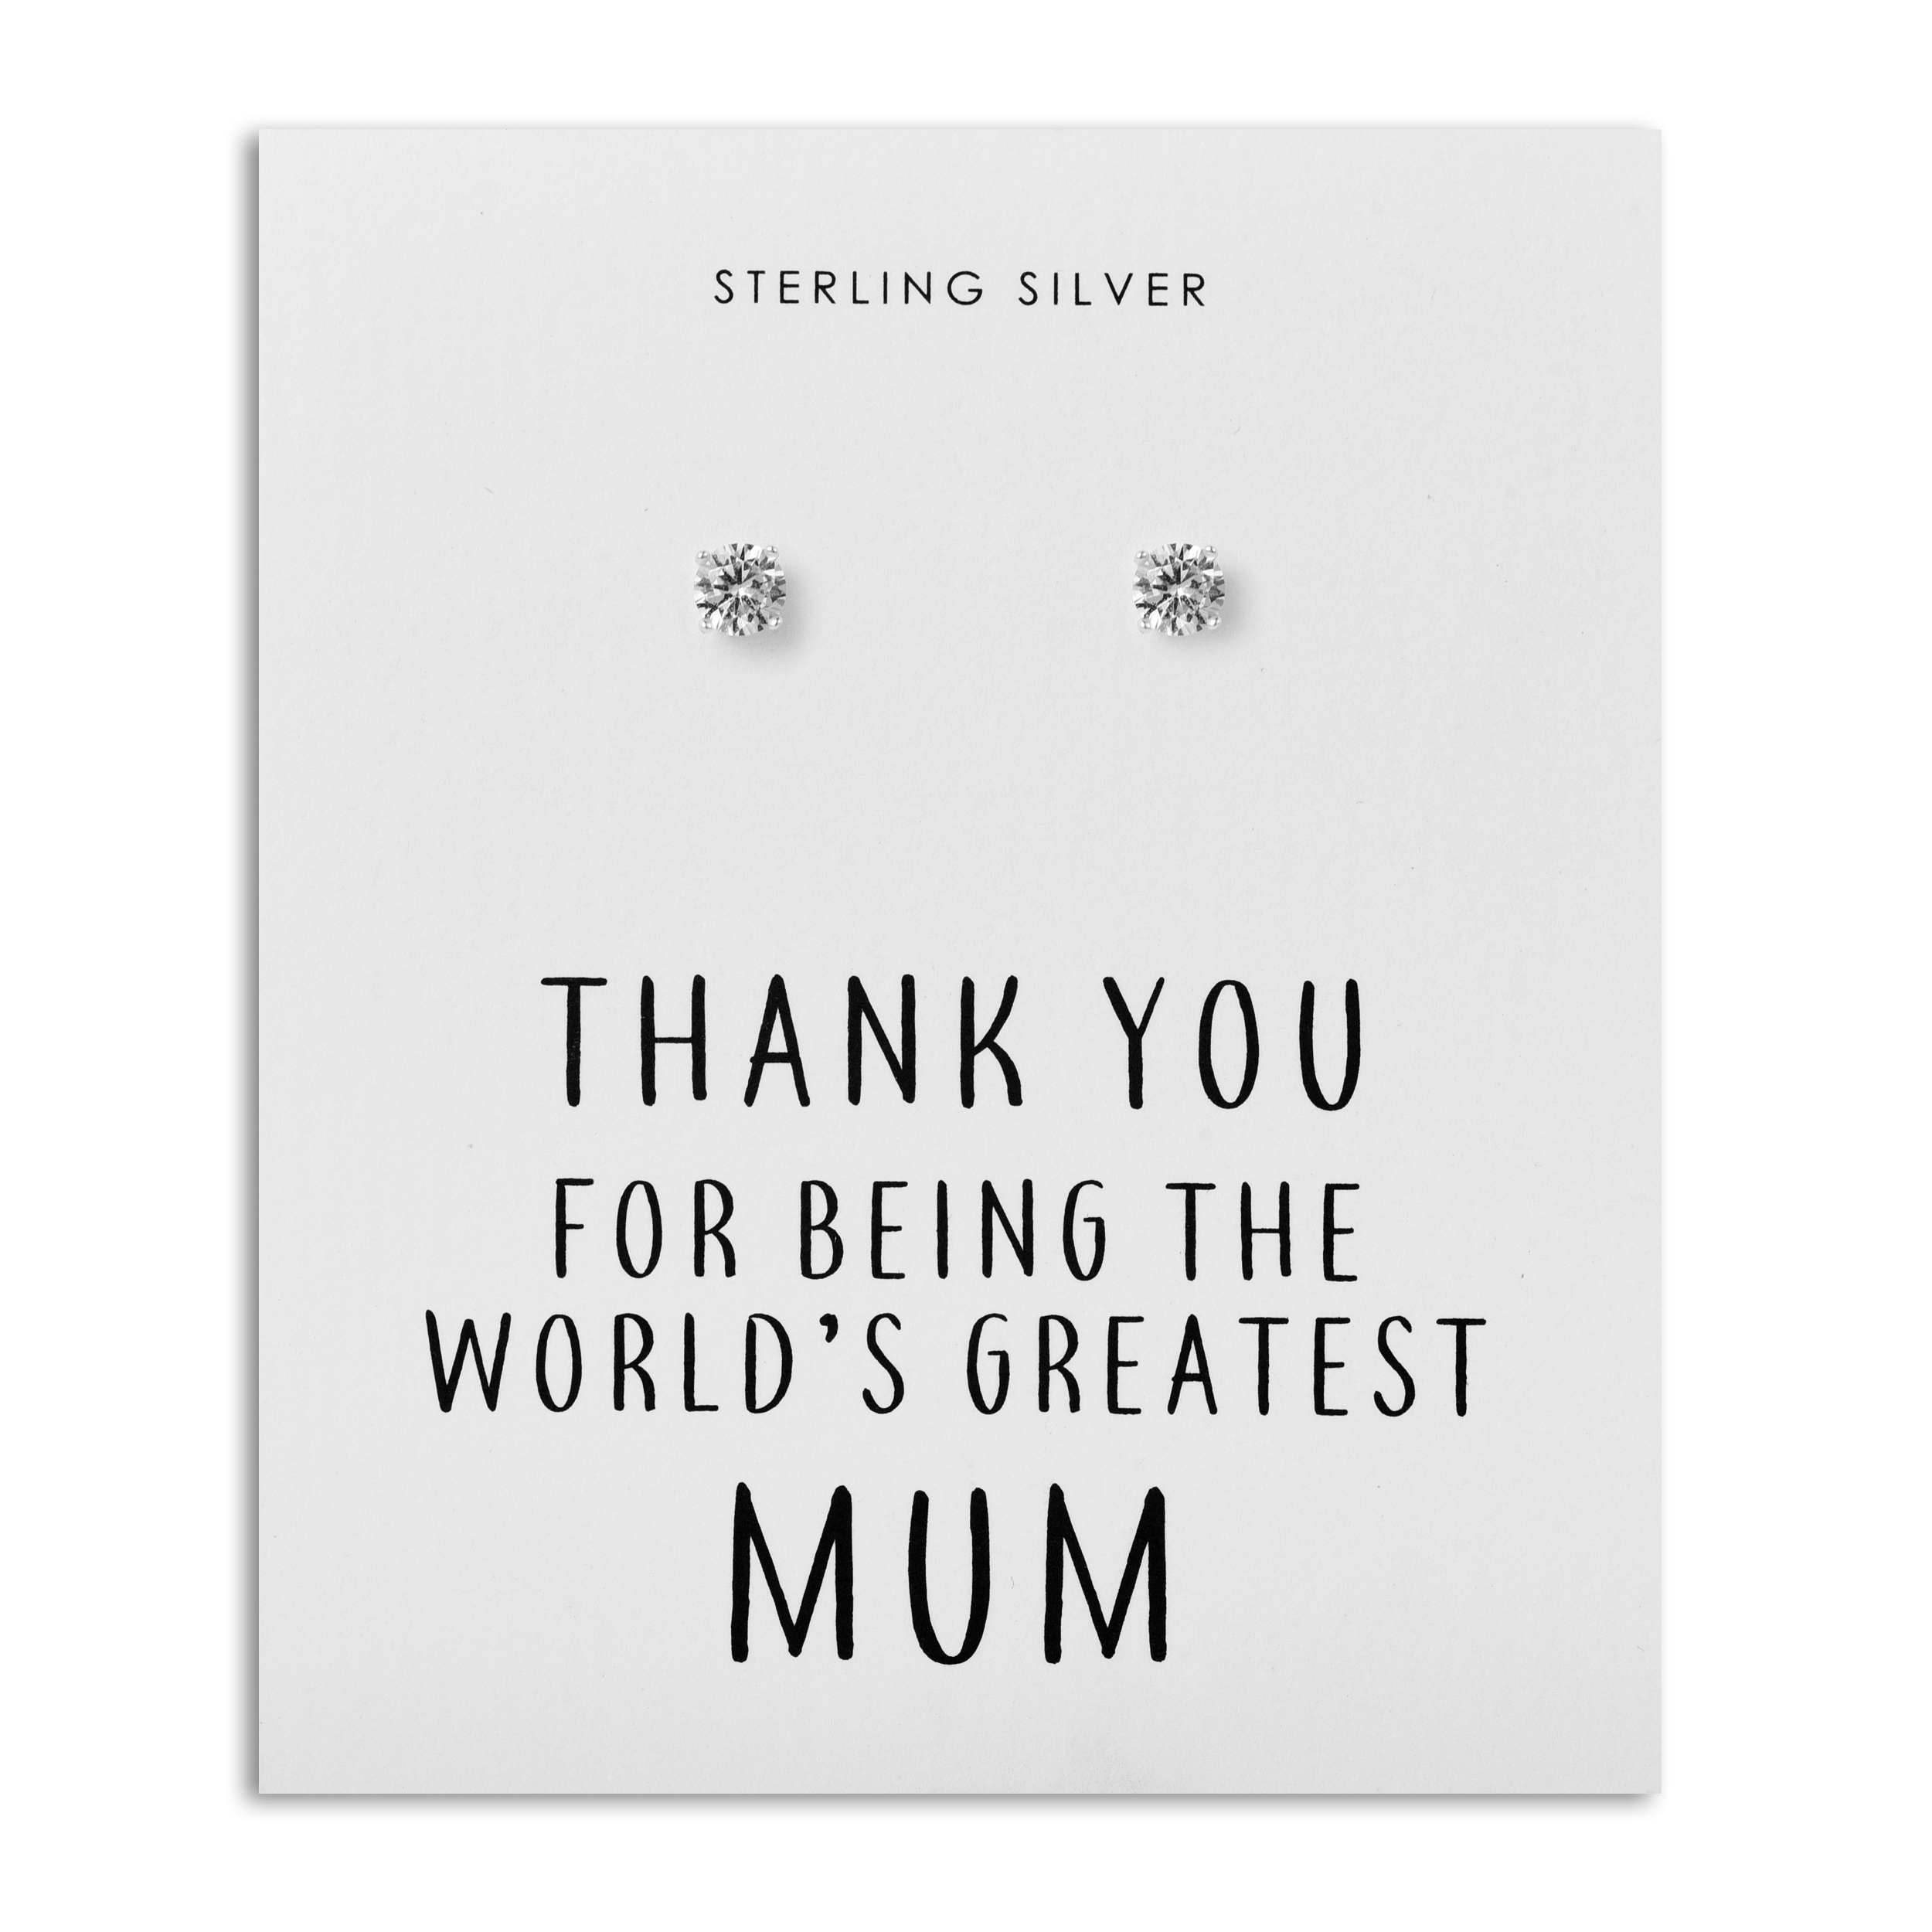 Sterling Silver World's Greatest Mum Crystal Earrings by Philip Jones Jewellery